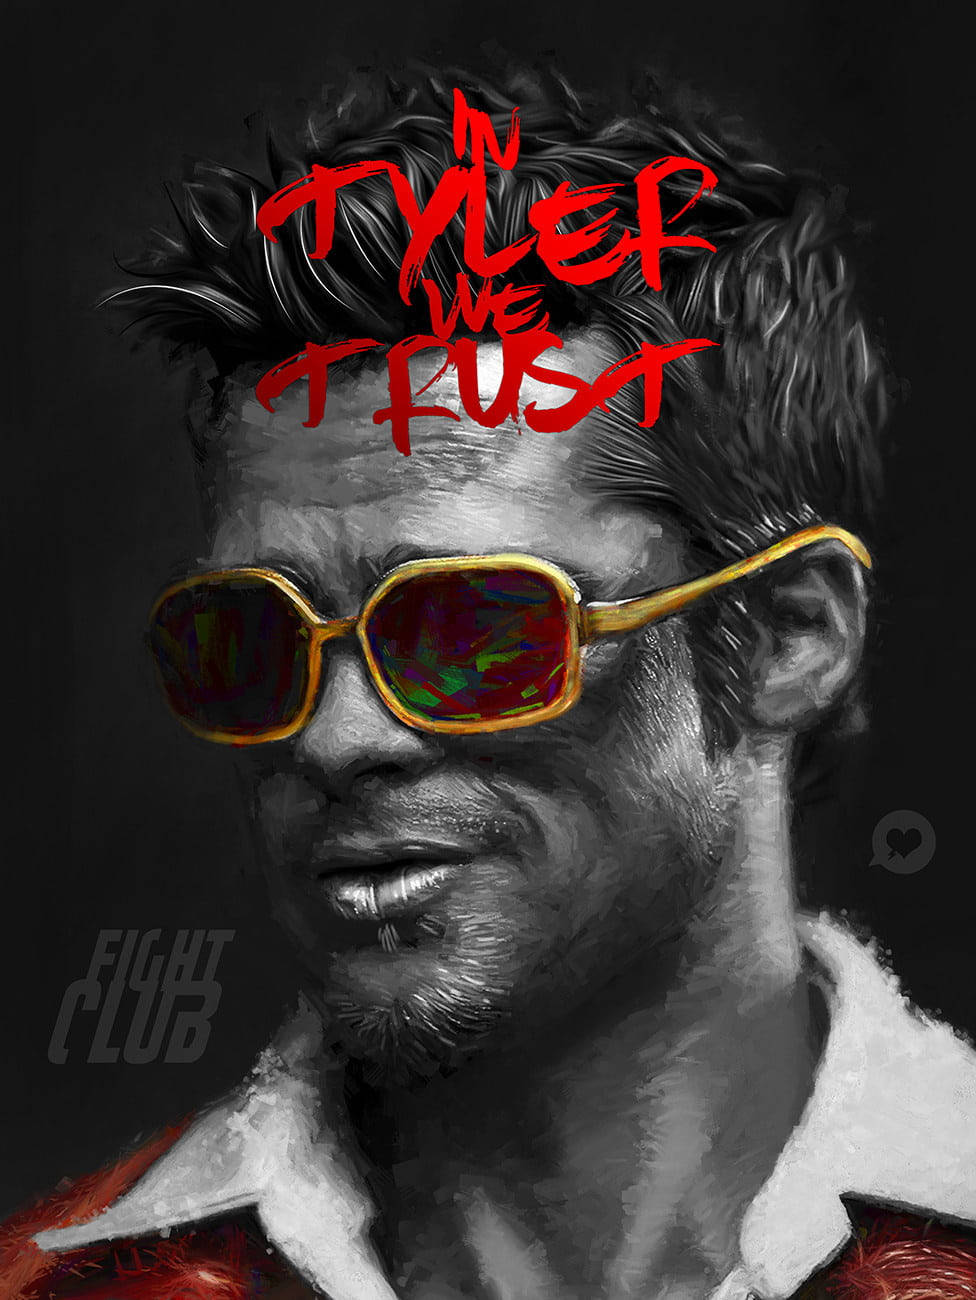 Download Fight Club In Tyler We Trust Wallpaper